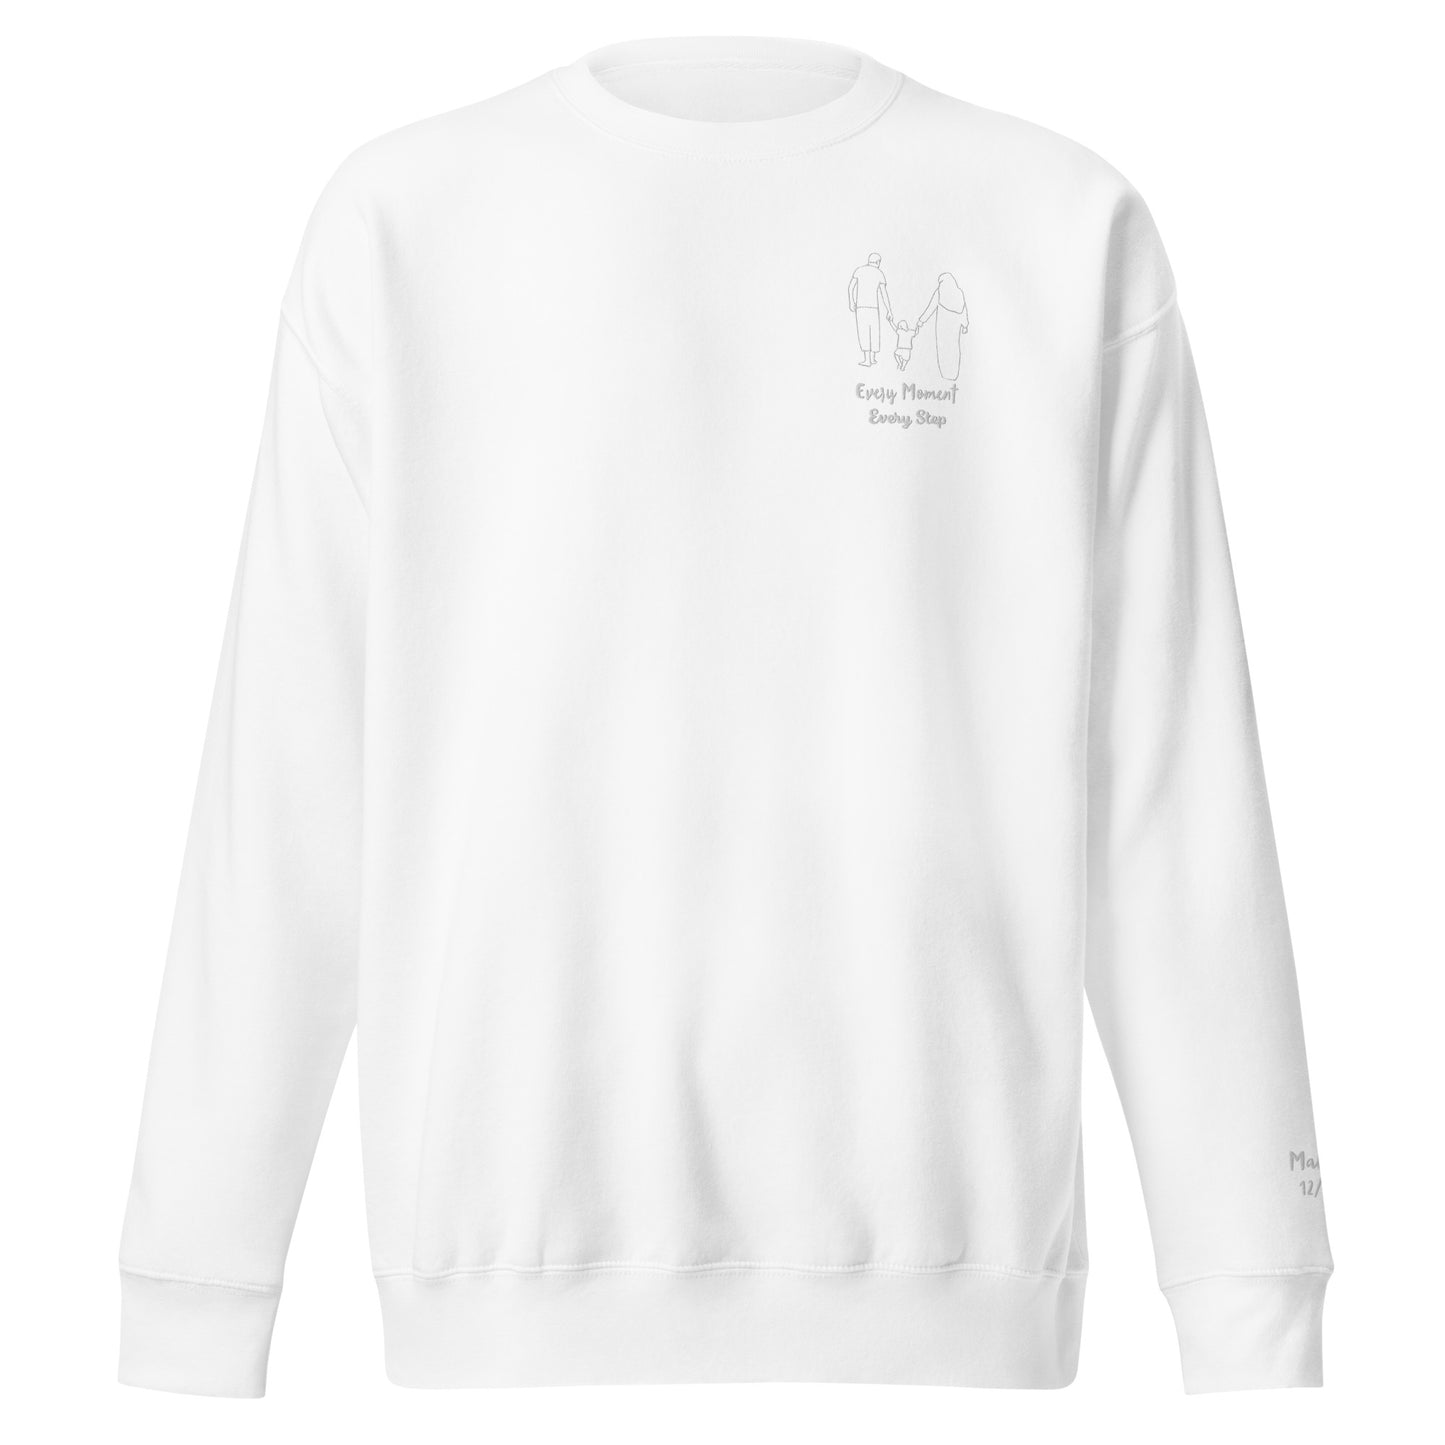 Outline Sweatshirt + Wrist Personalisation